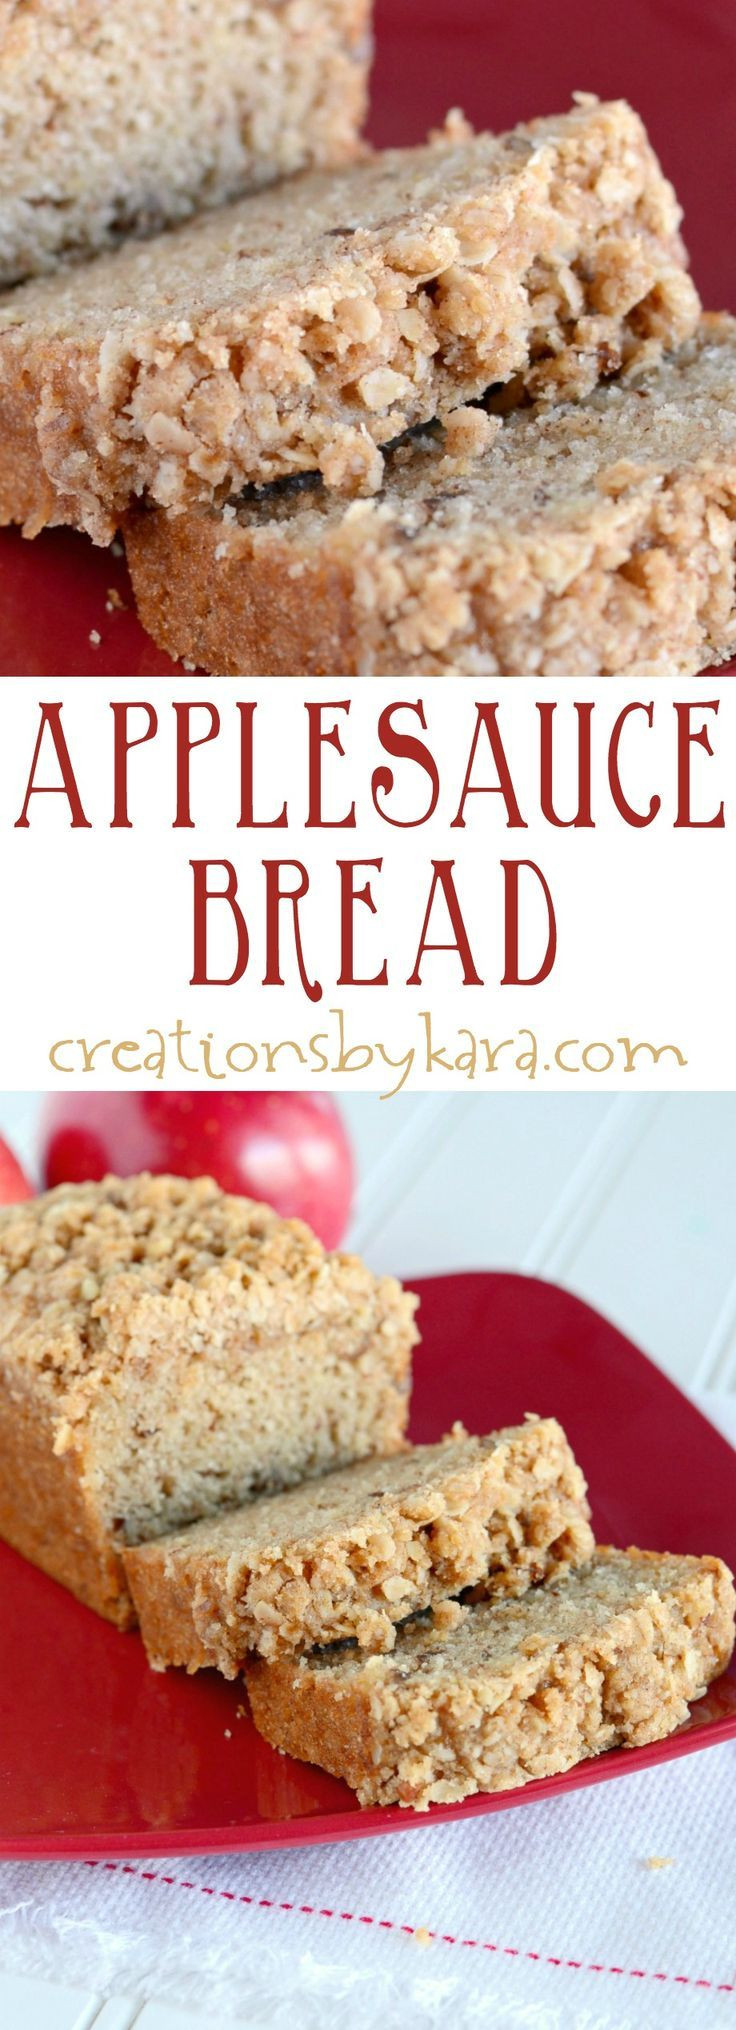 Easy Healthy Bread Recipes
 25 best ideas about Applesauce bread on Pinterest